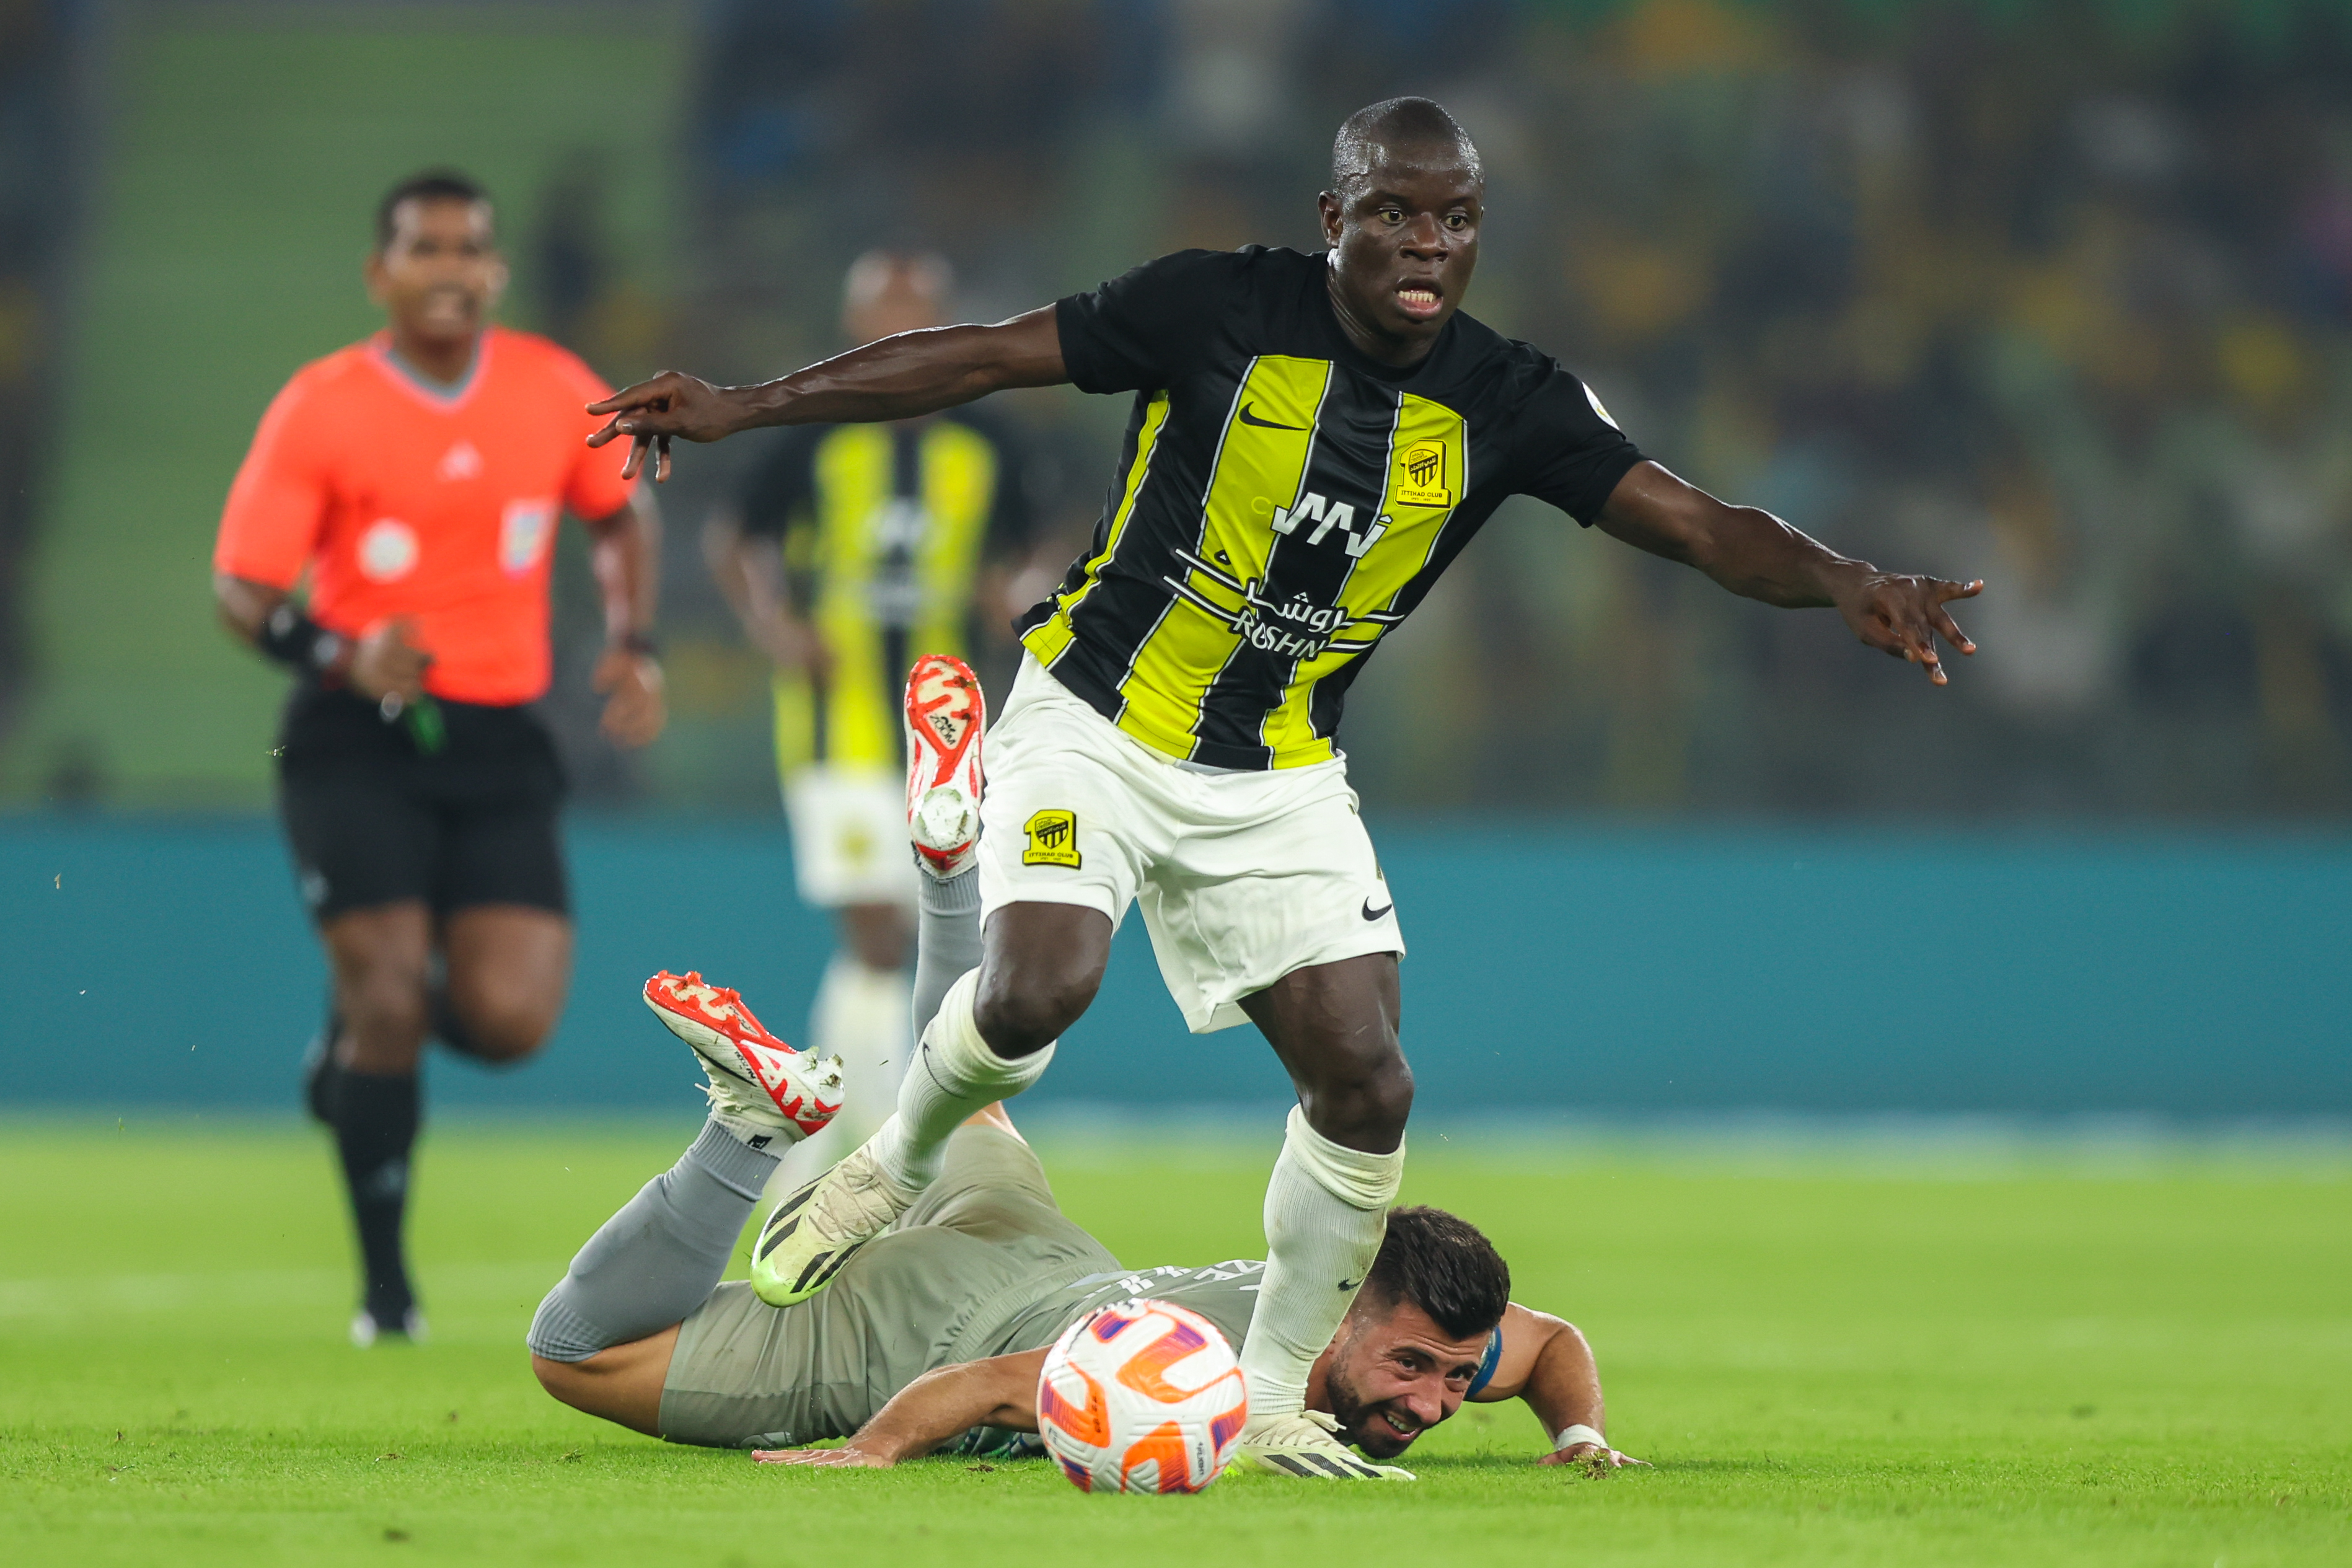 Jota seals top spot for Al-Ittihad in AFC Champions League's Group C